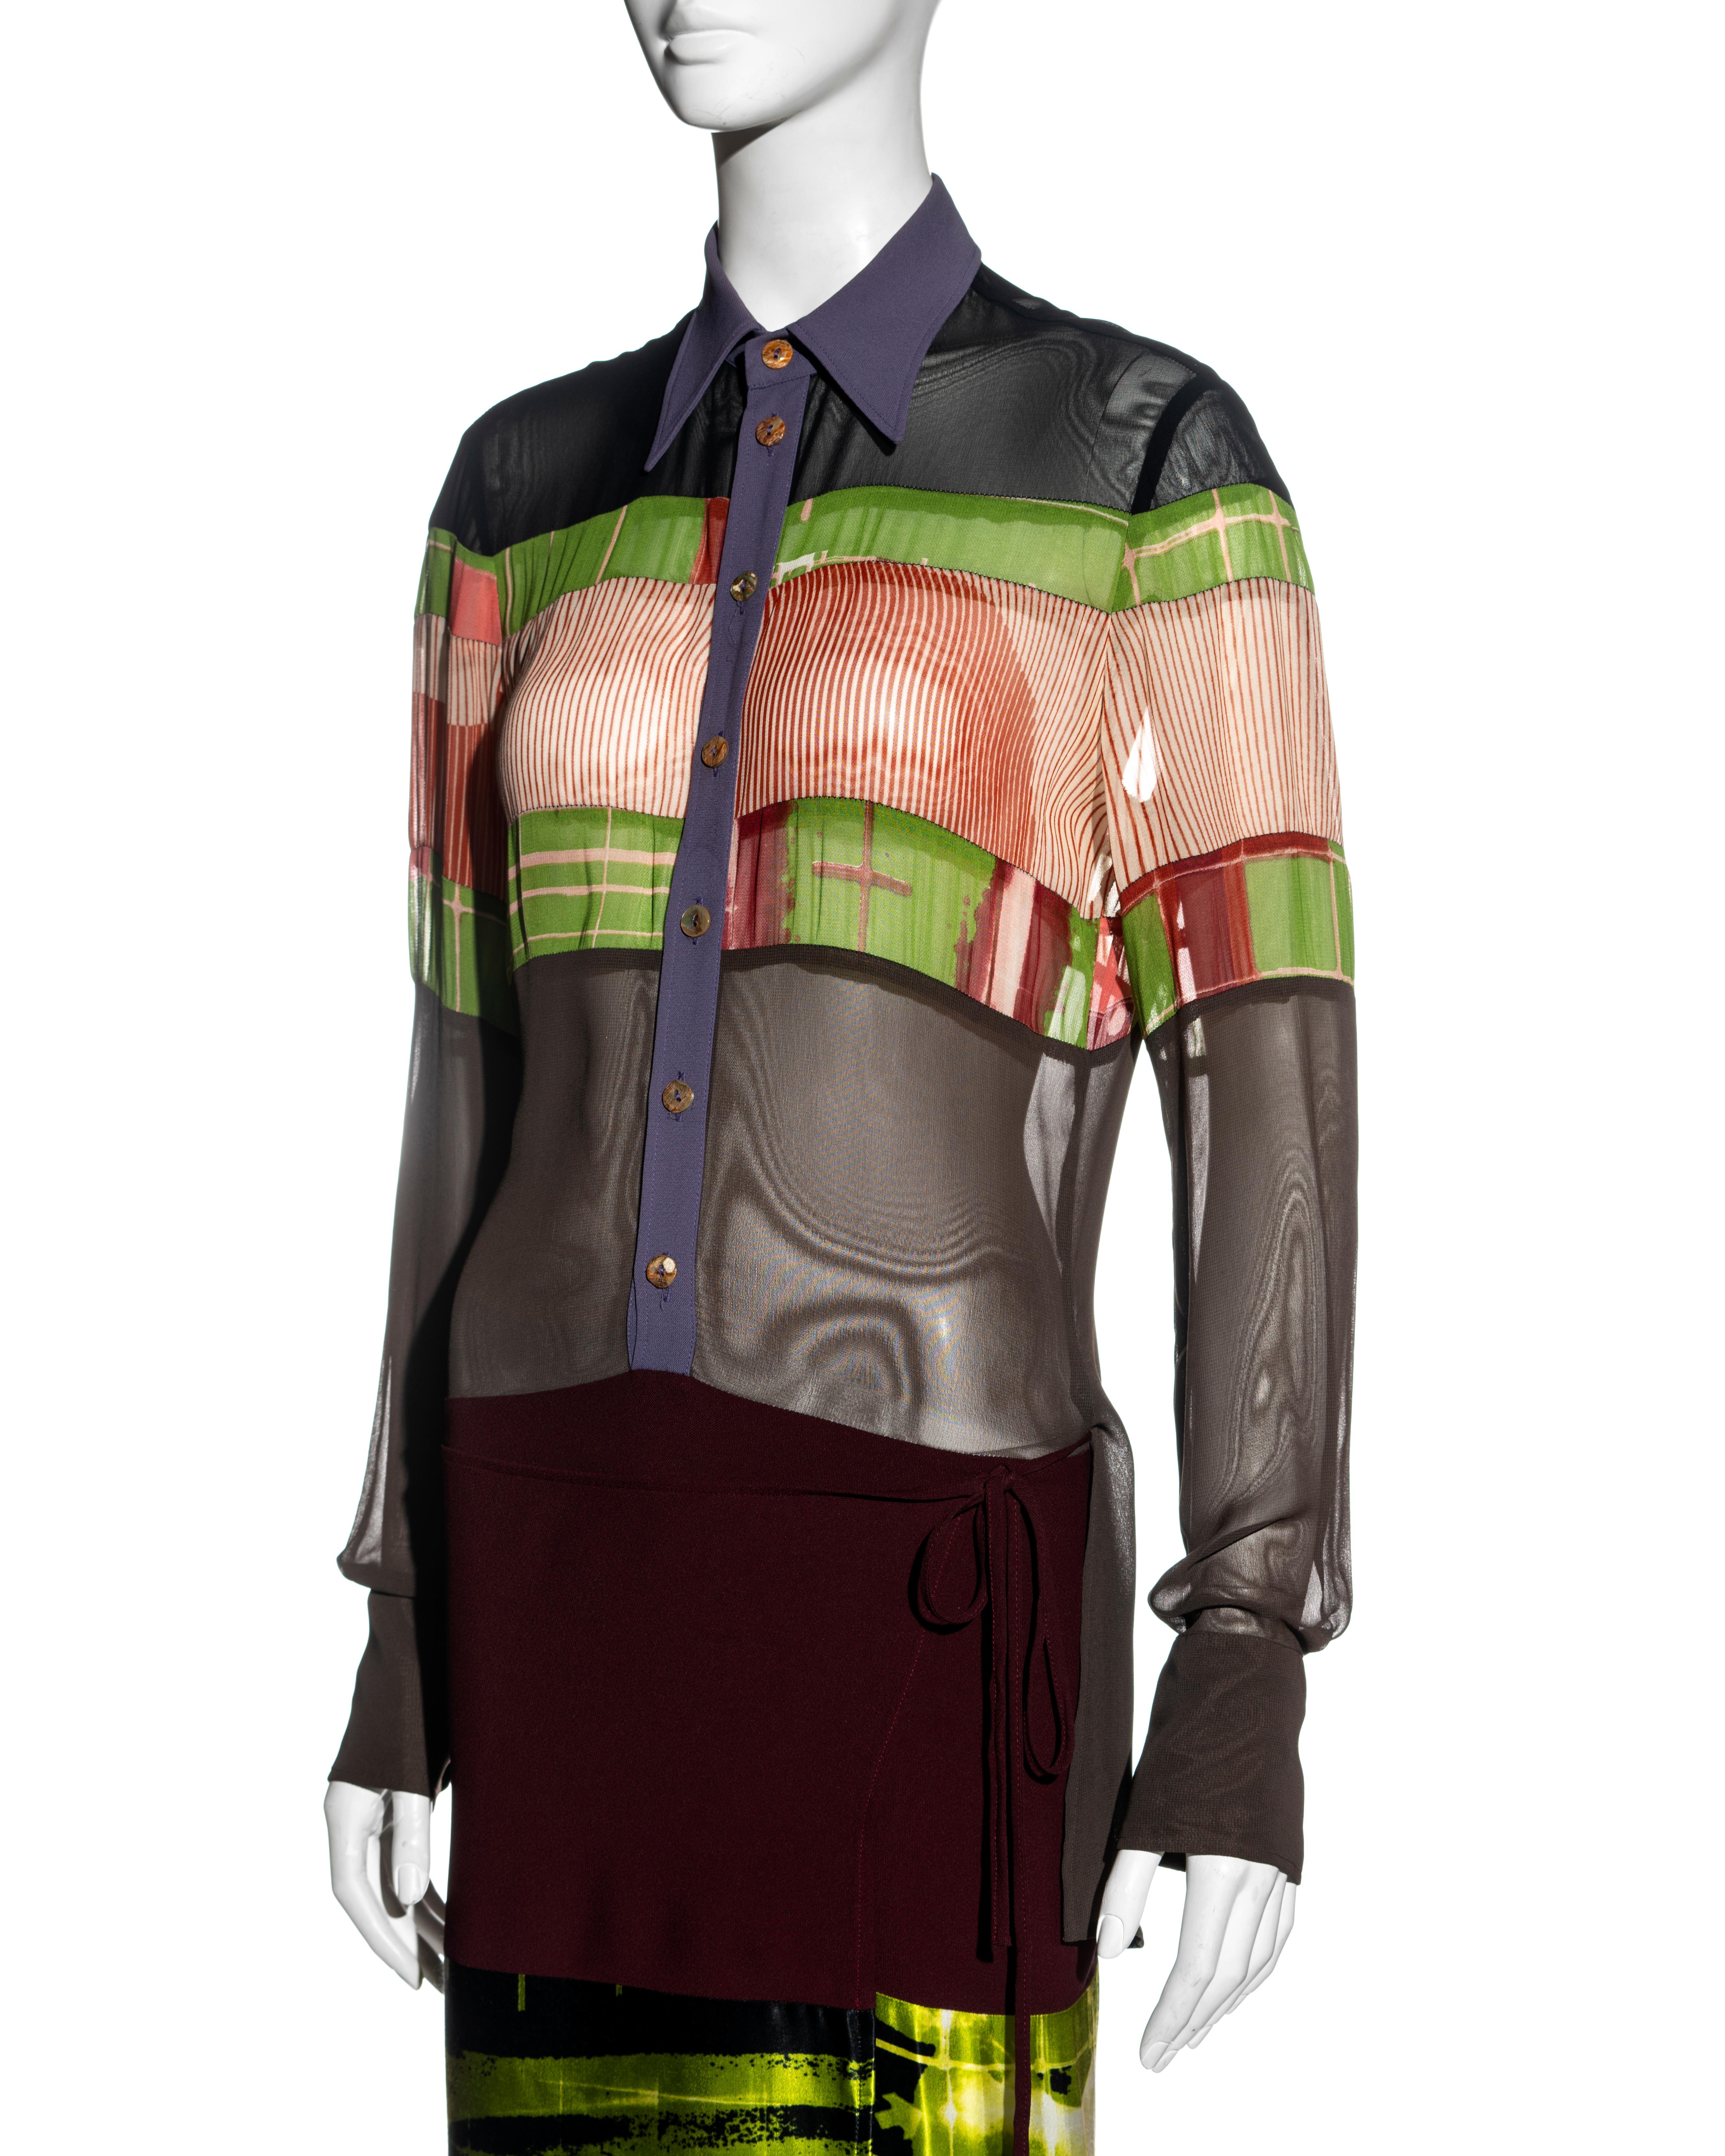 Black Jean Paul Gaulter 'Cyberhippie' shirt dress with wrap skirt, ss 1996